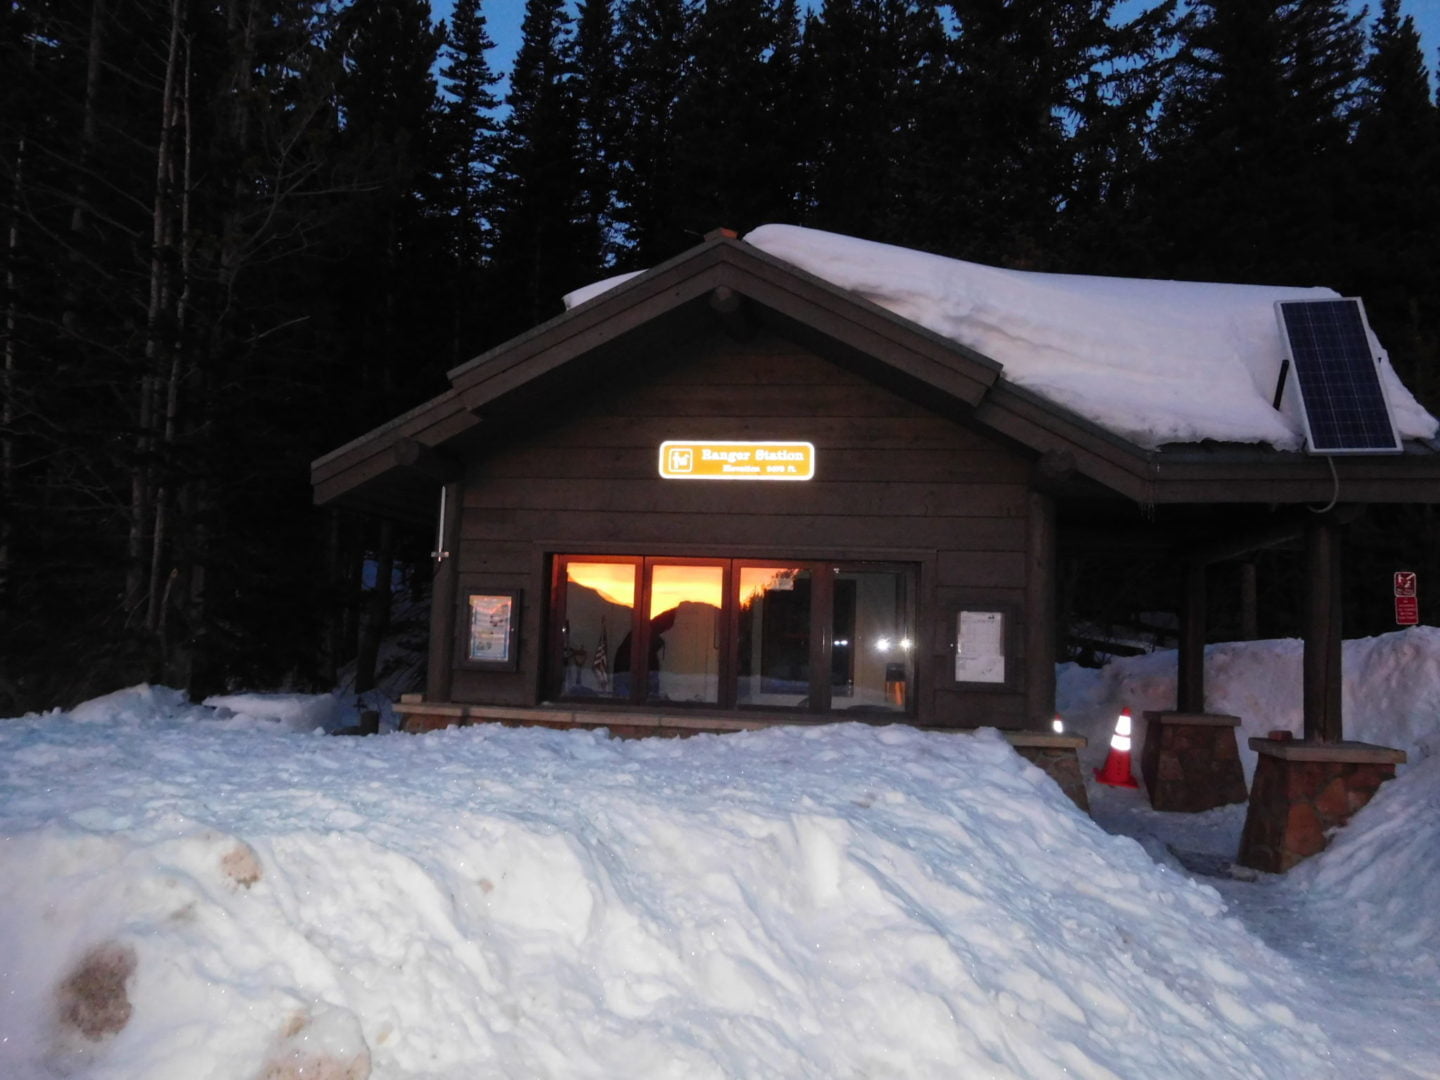 Bear Lake ranger station